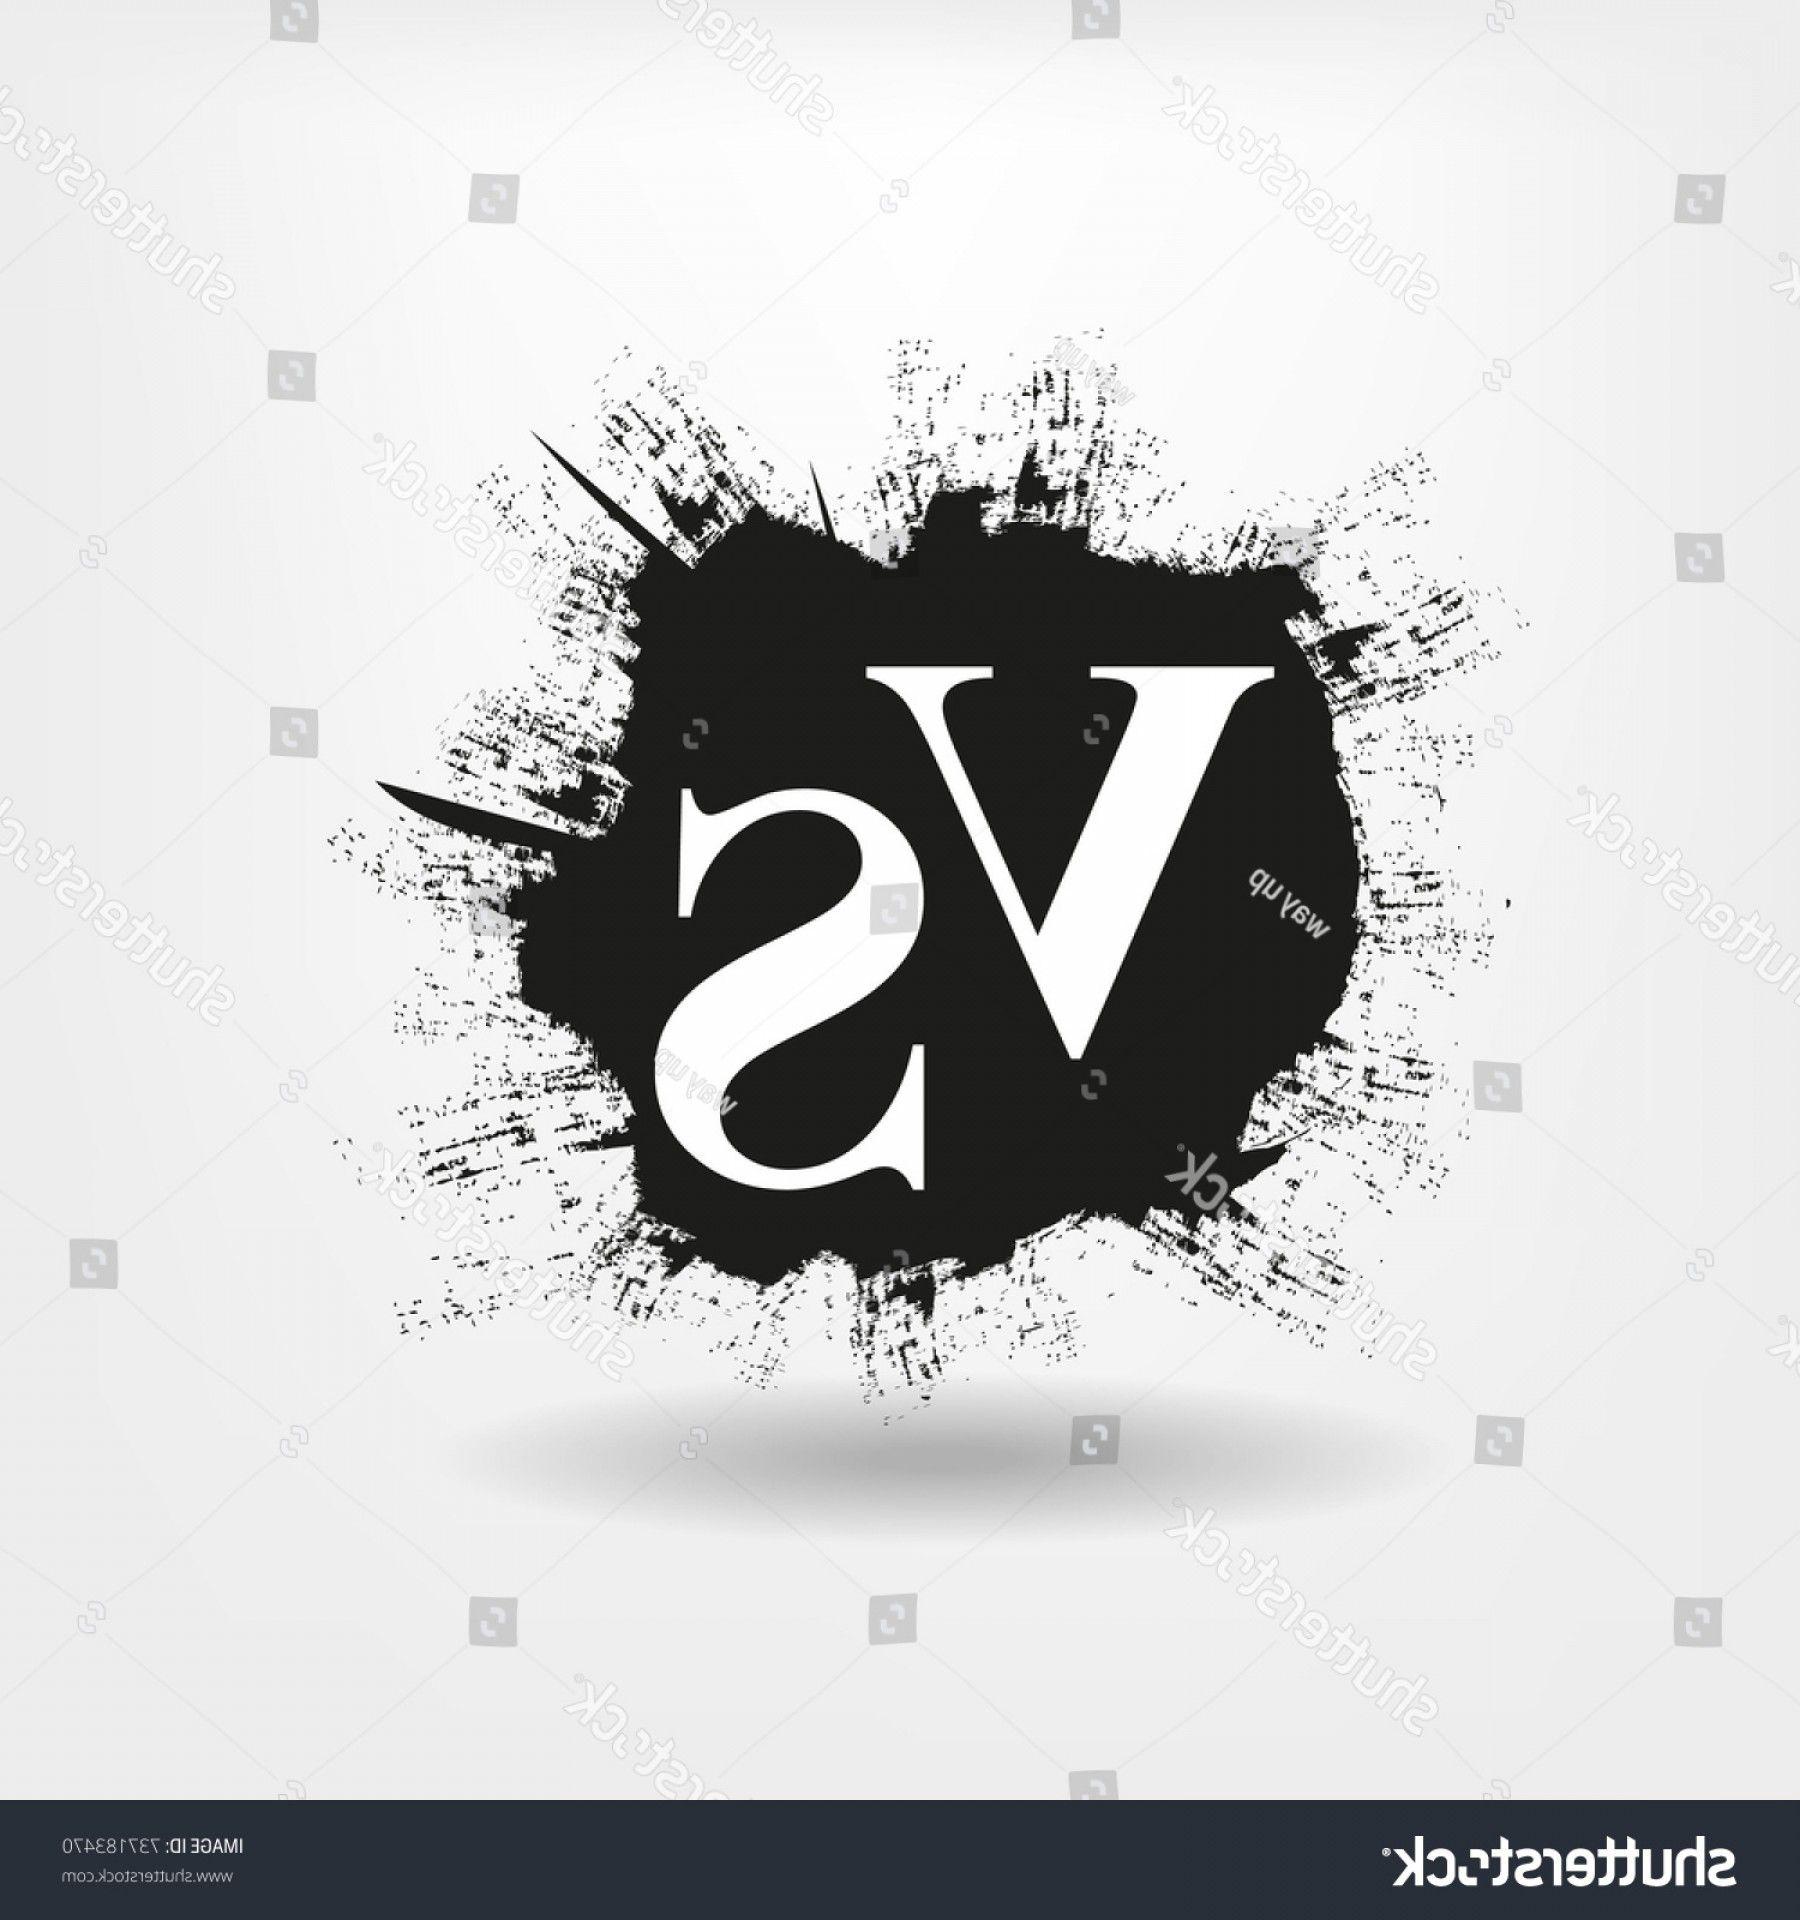 Versus Logo - Versus Logo Vs Vector Letters Illustration | SOIDERGI